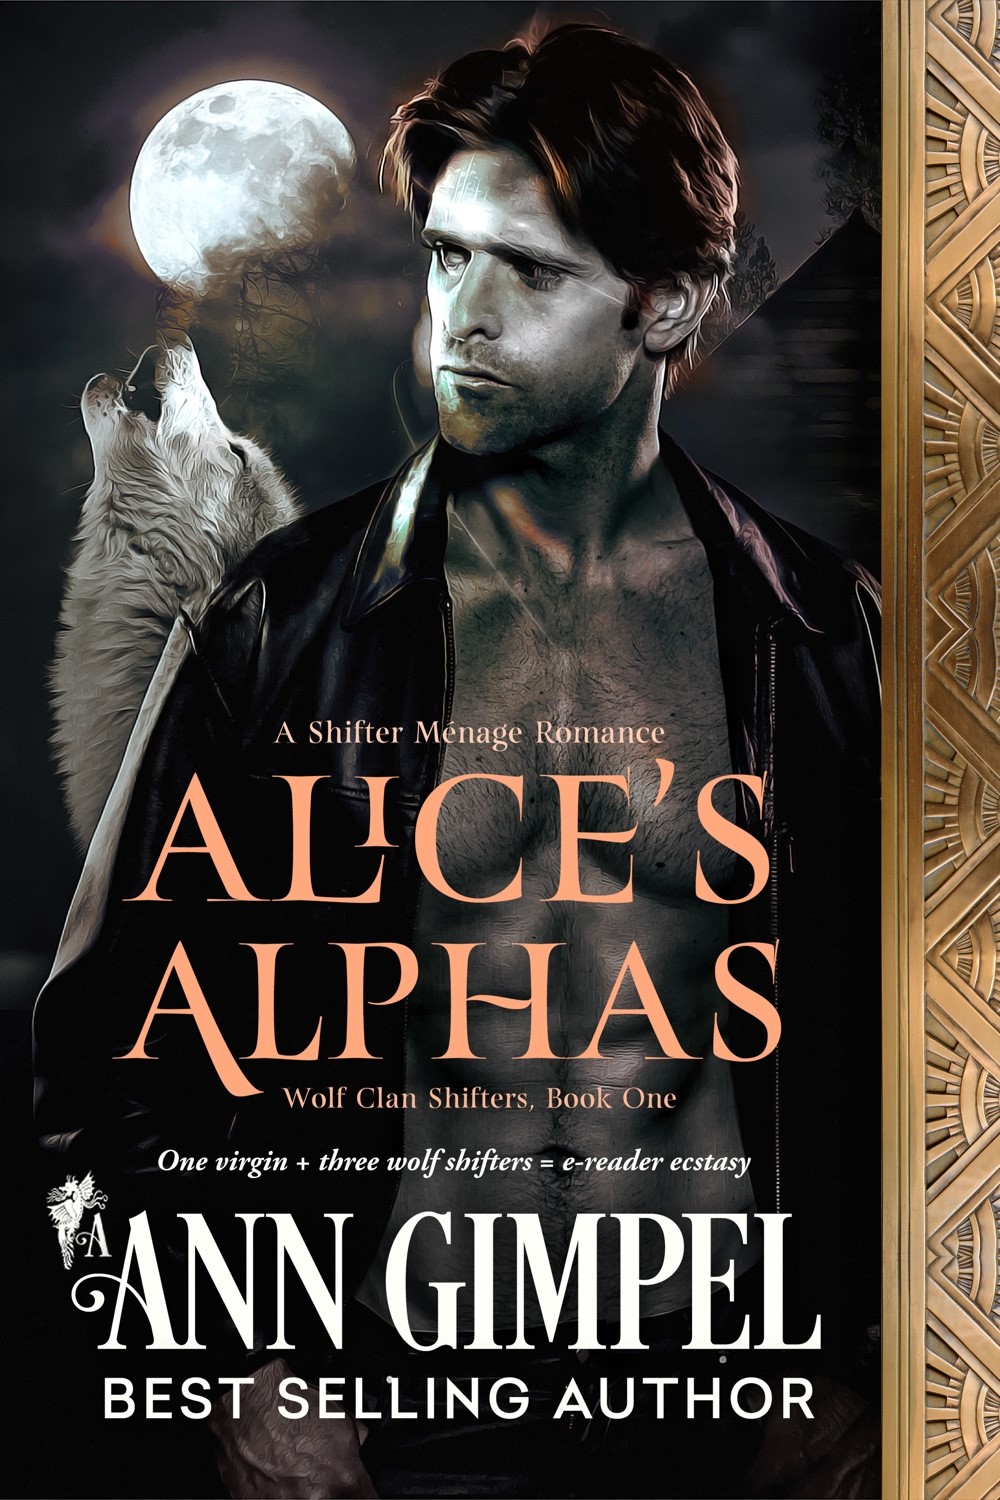 Alice’s Alphas by Ann Gimpel